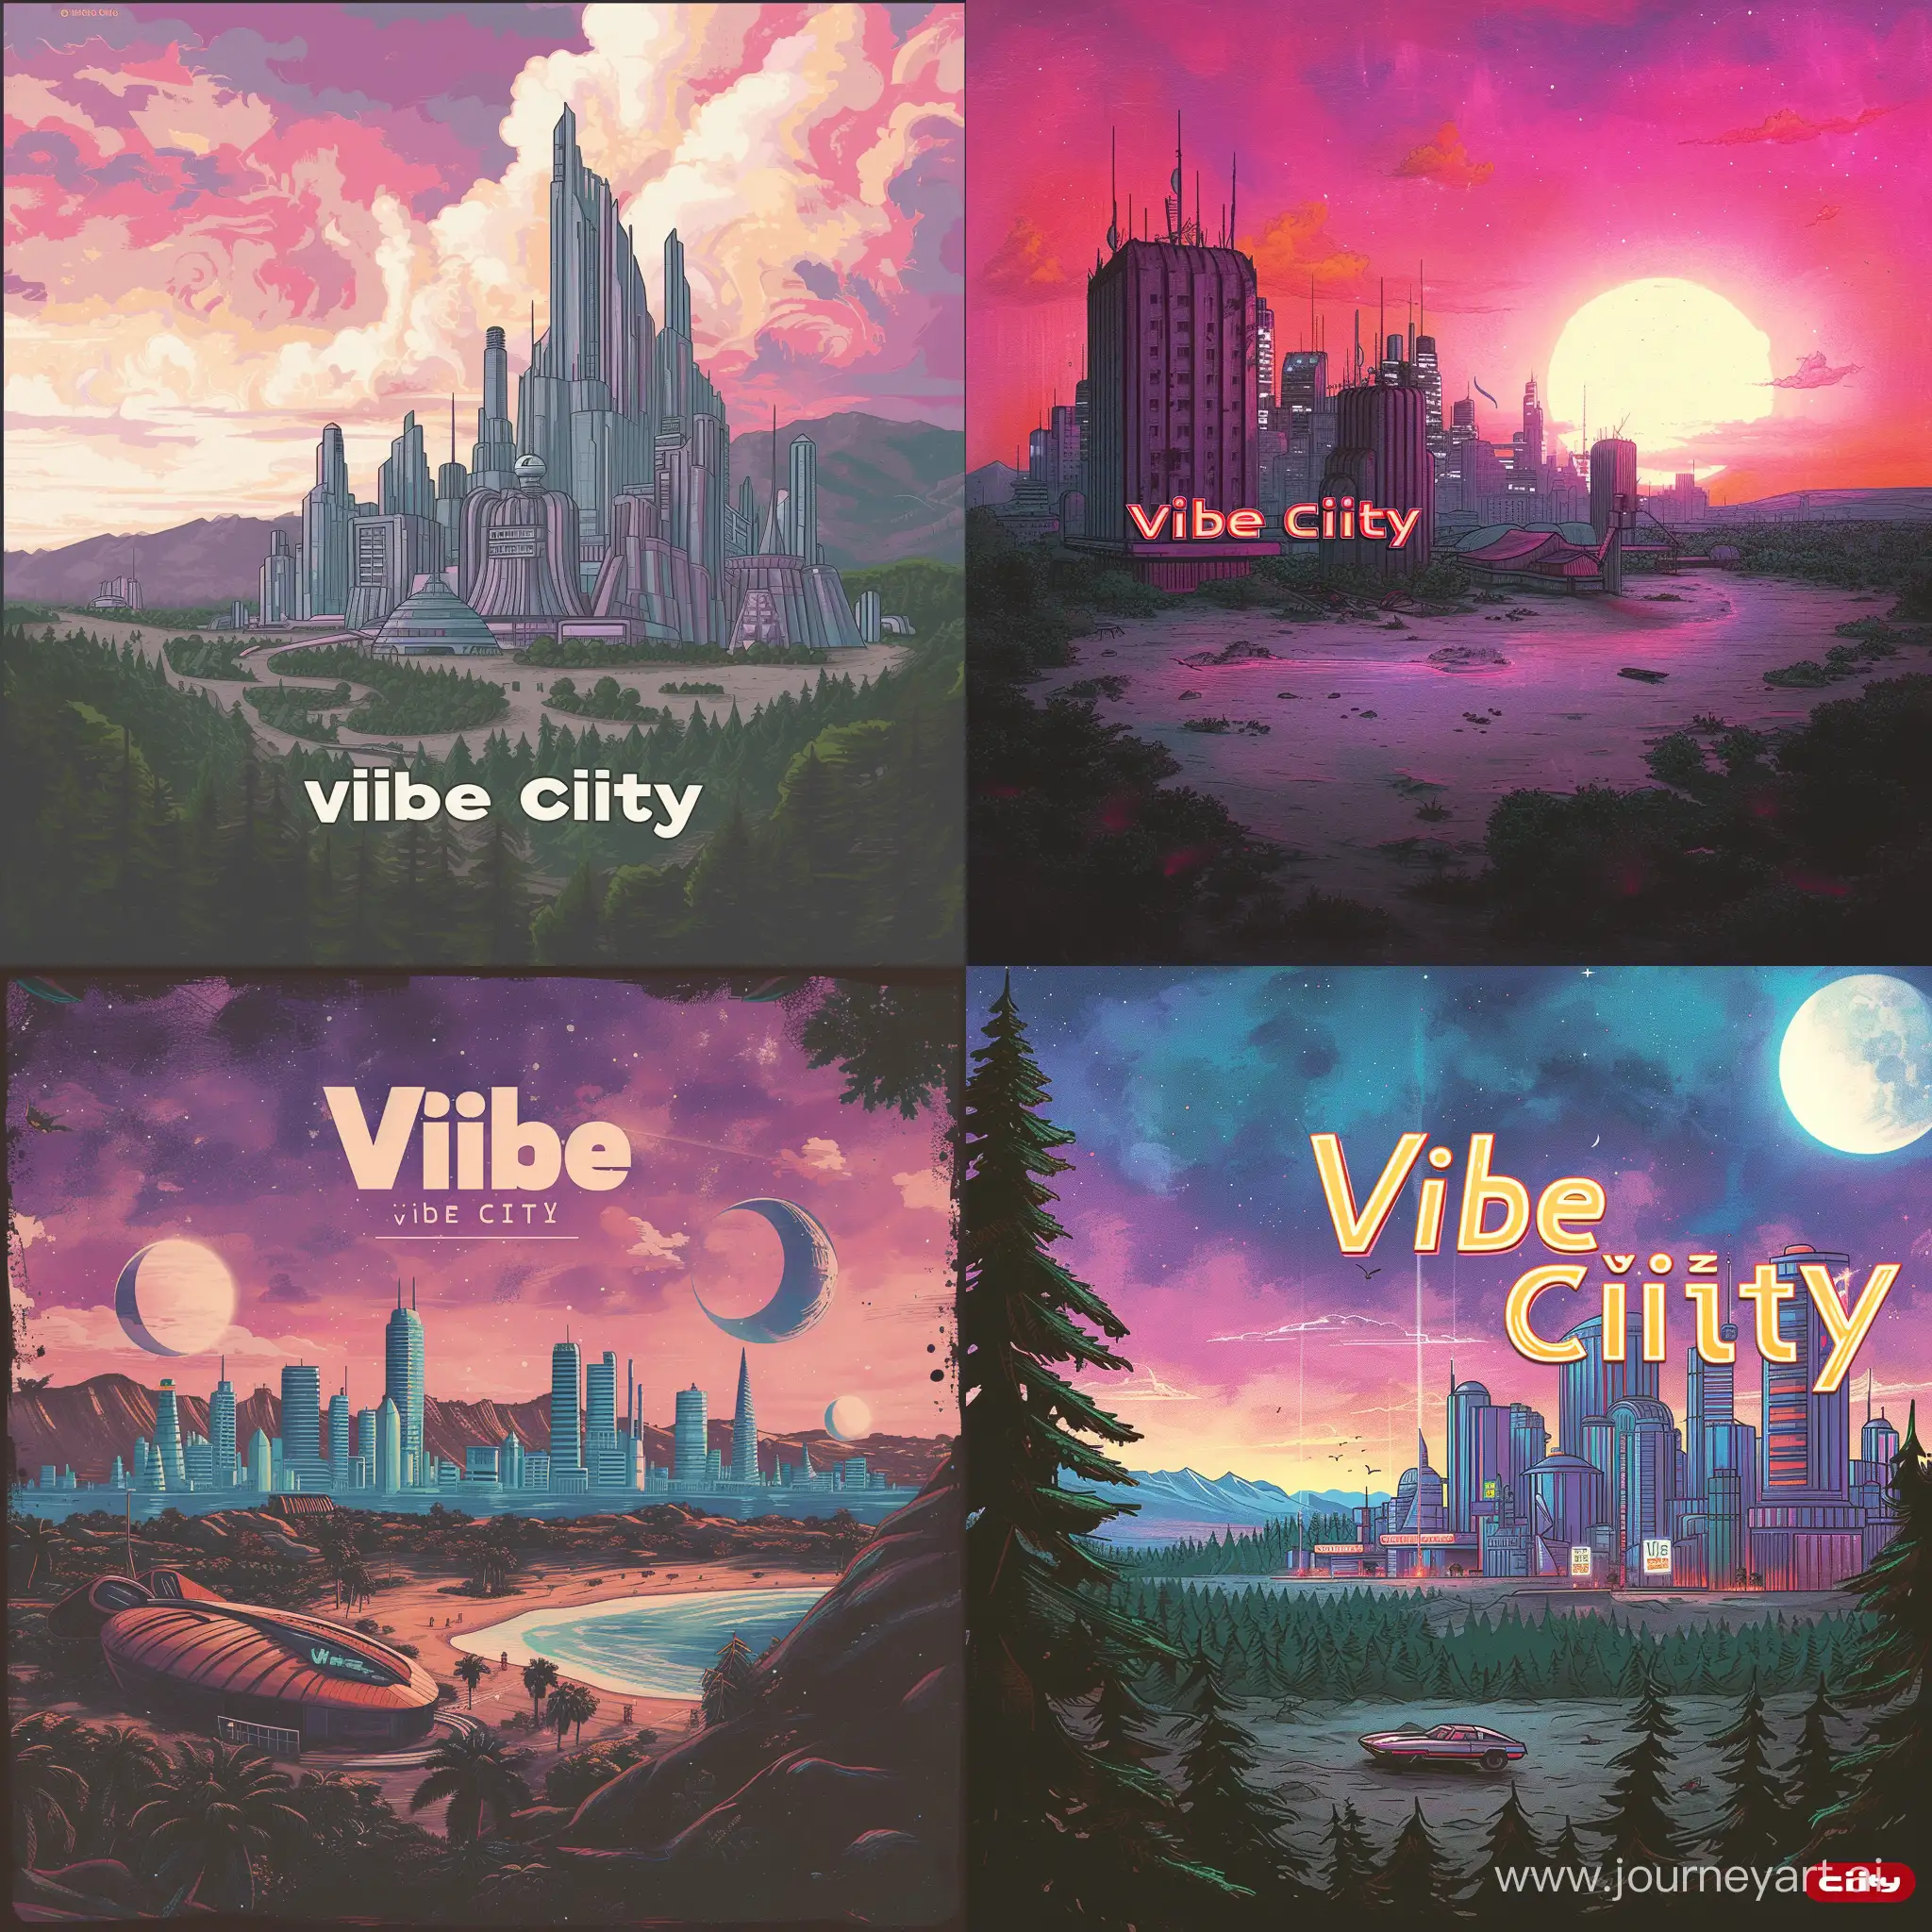 Viibe-City-Nostalgic-70s-Retro-Skyline-with-Vibrant-Colors